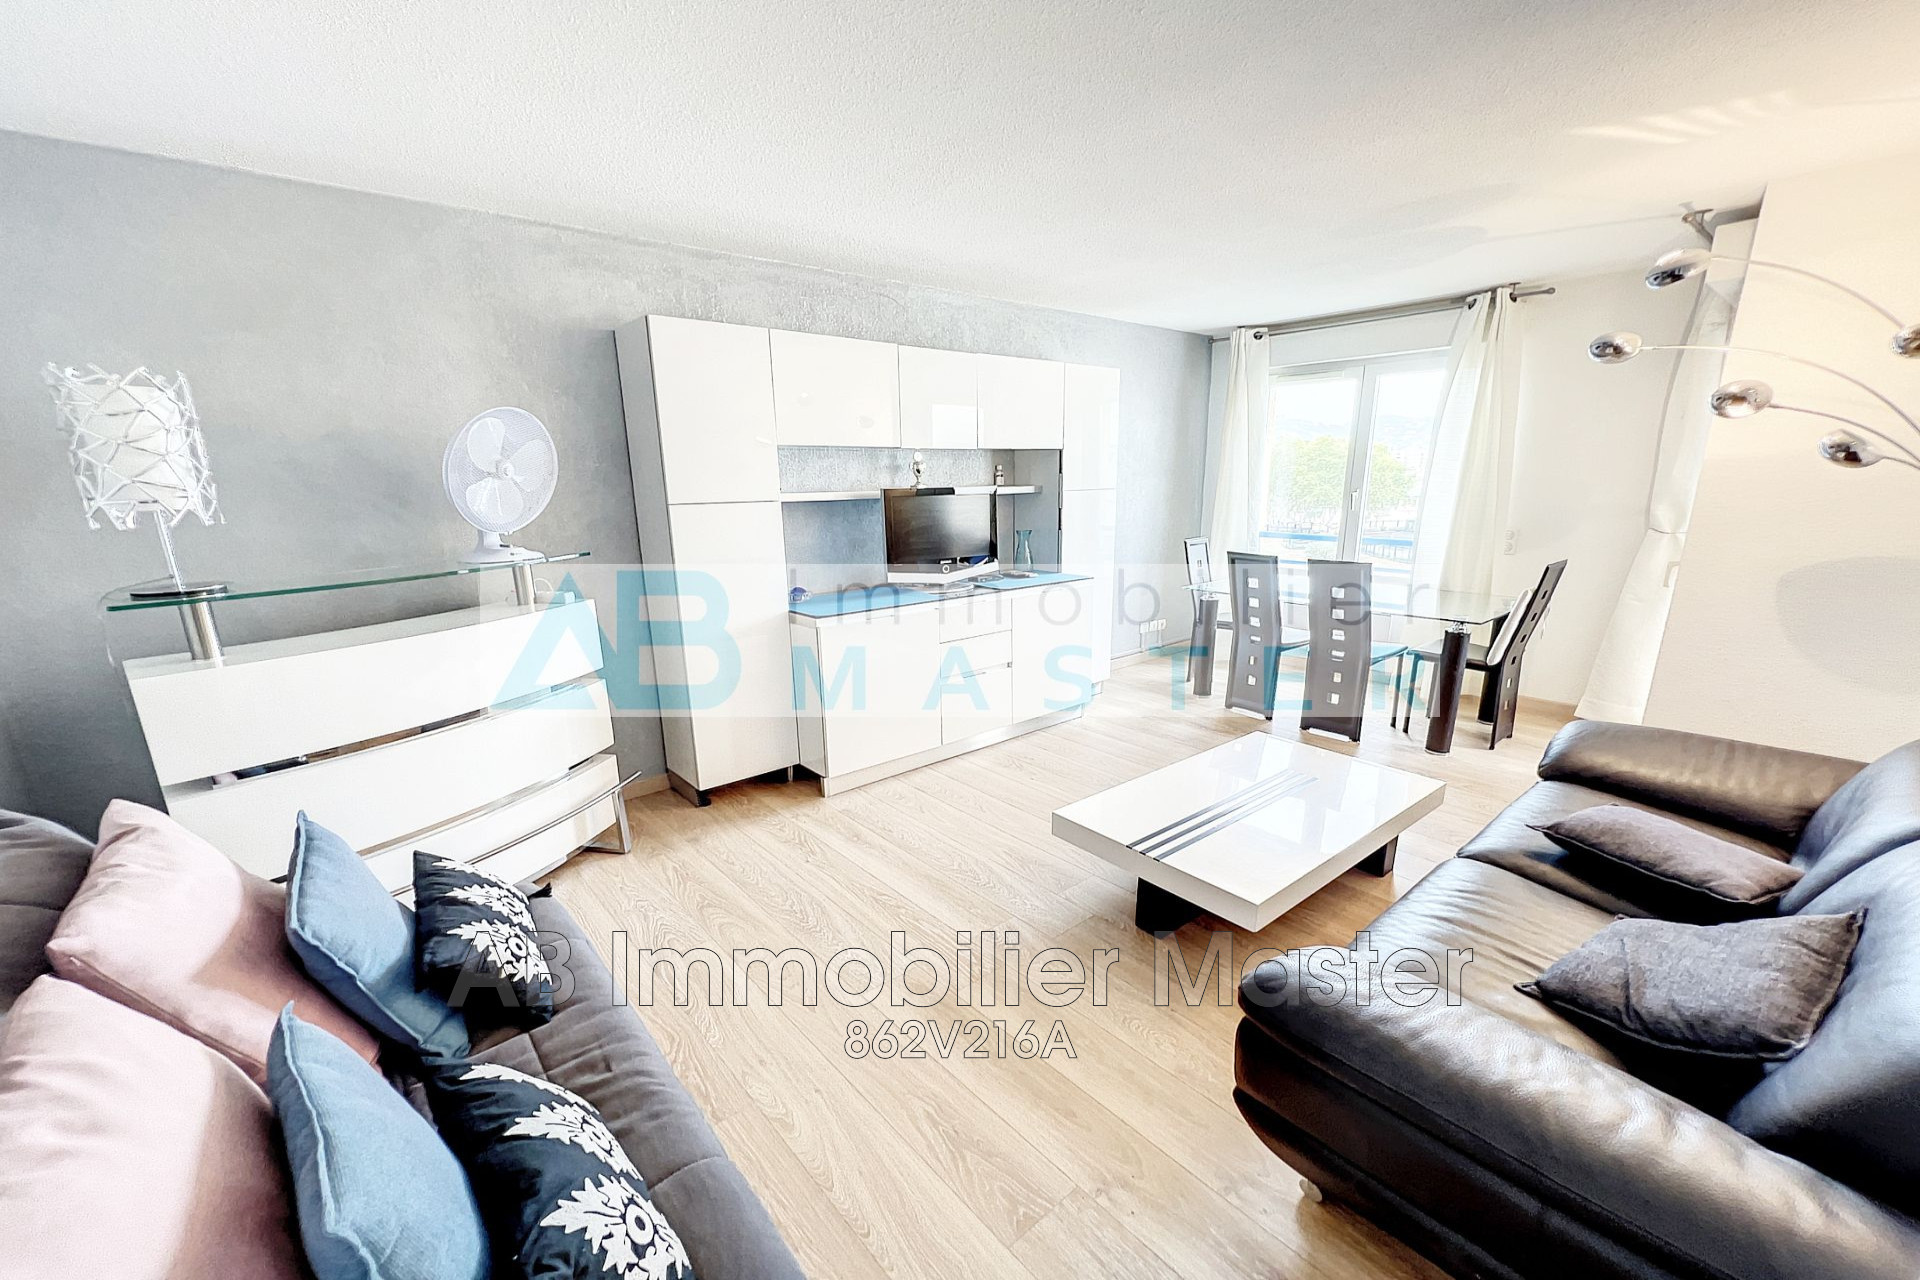 Vente Appartement 43m² 2 Pièces à Antibes (06600) - Ab Immobilier Master